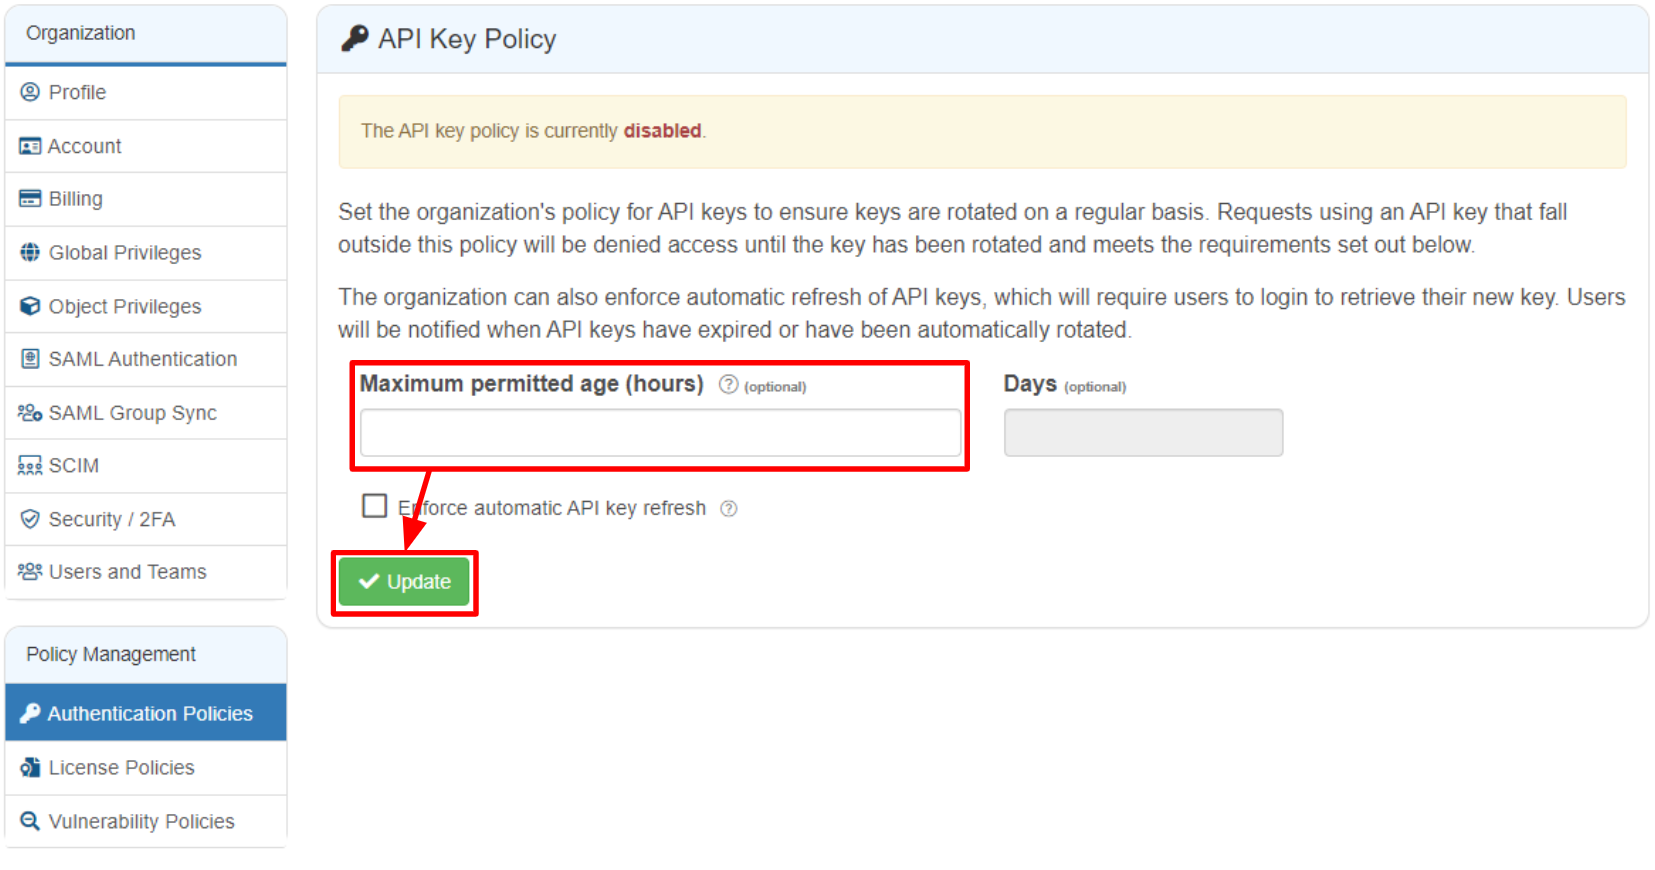 Enable API Key Policy

